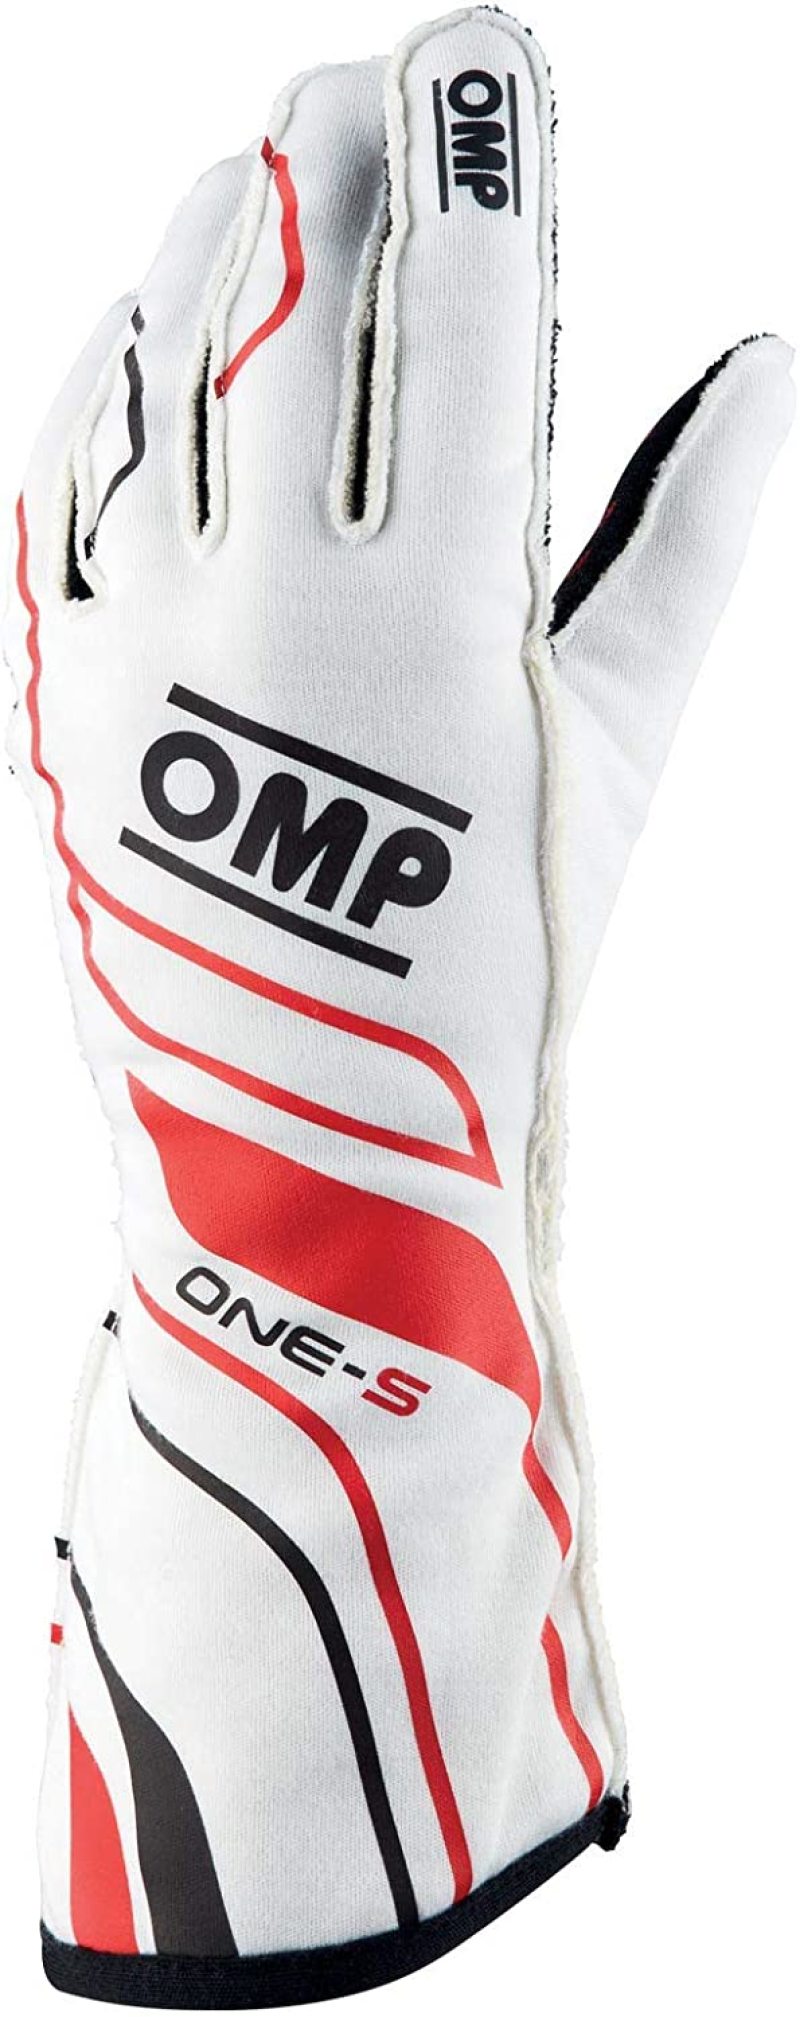 OMP One-S Gloves White - Size M Fia 8556-2018 - IB0-0770-A01-020-M